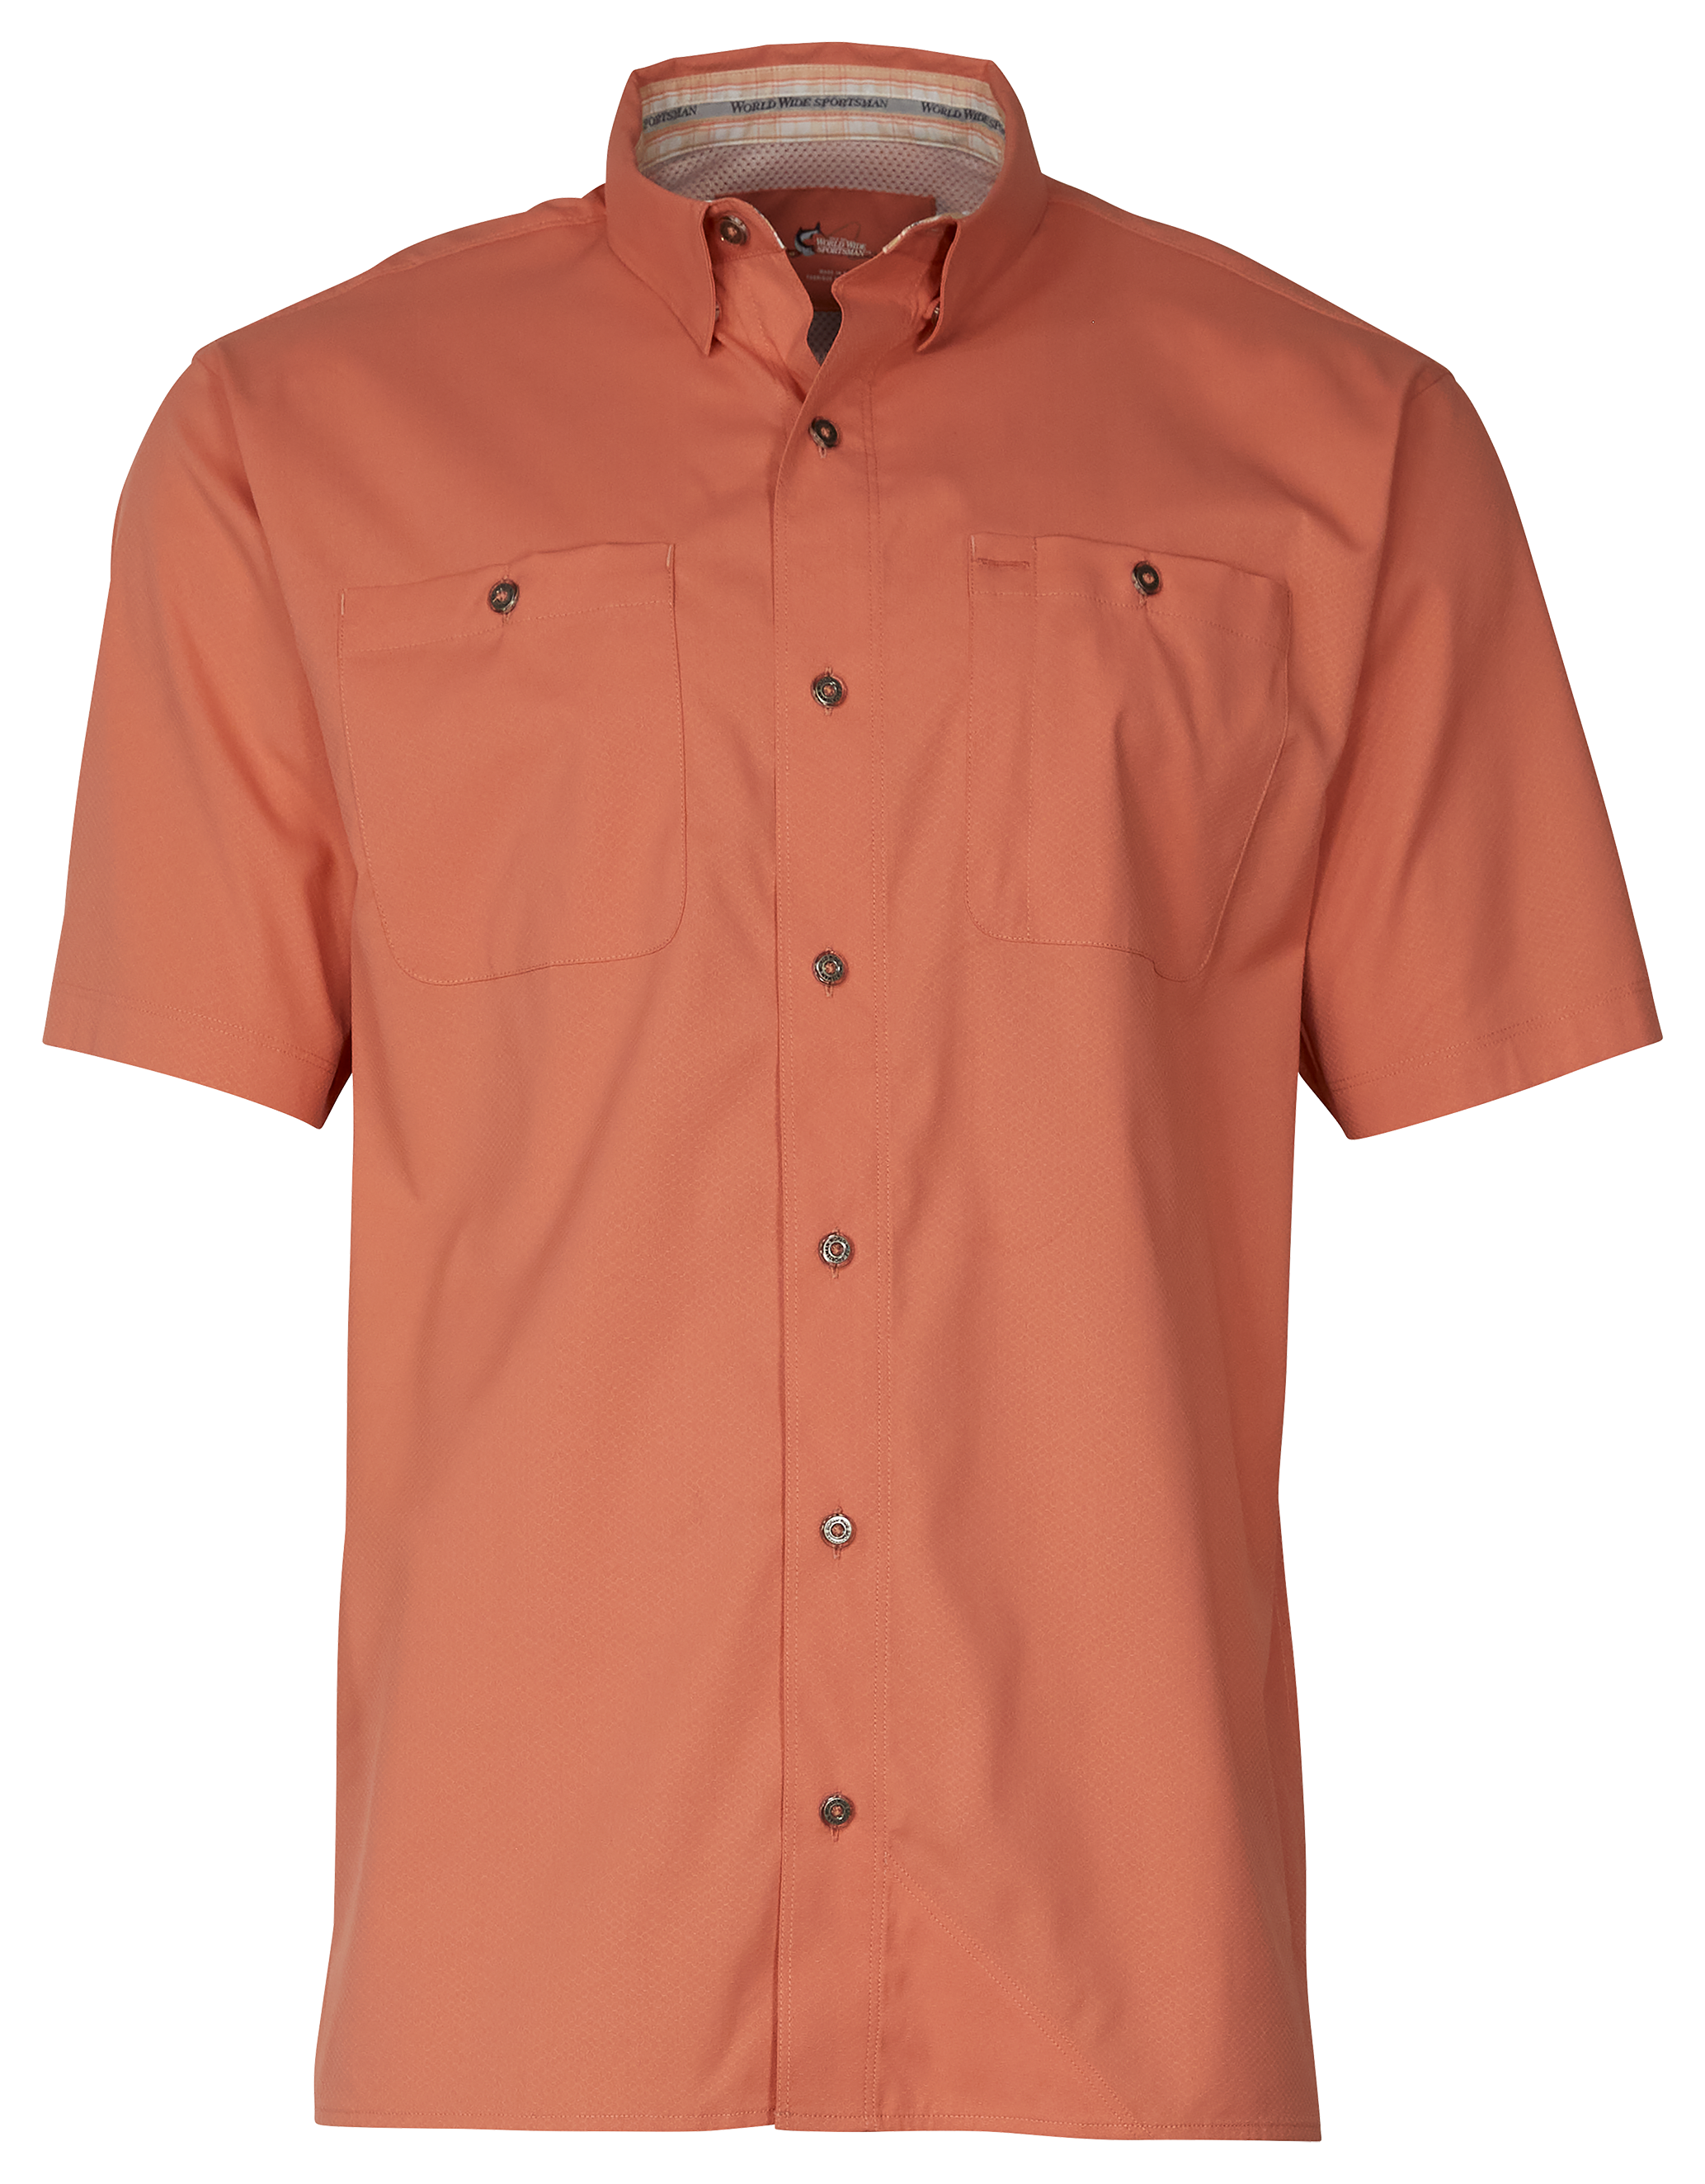 World Wide Sportsman Ultimate Angler Solid Short-Sleeve Shirt for Men - Dawn Blue - XL